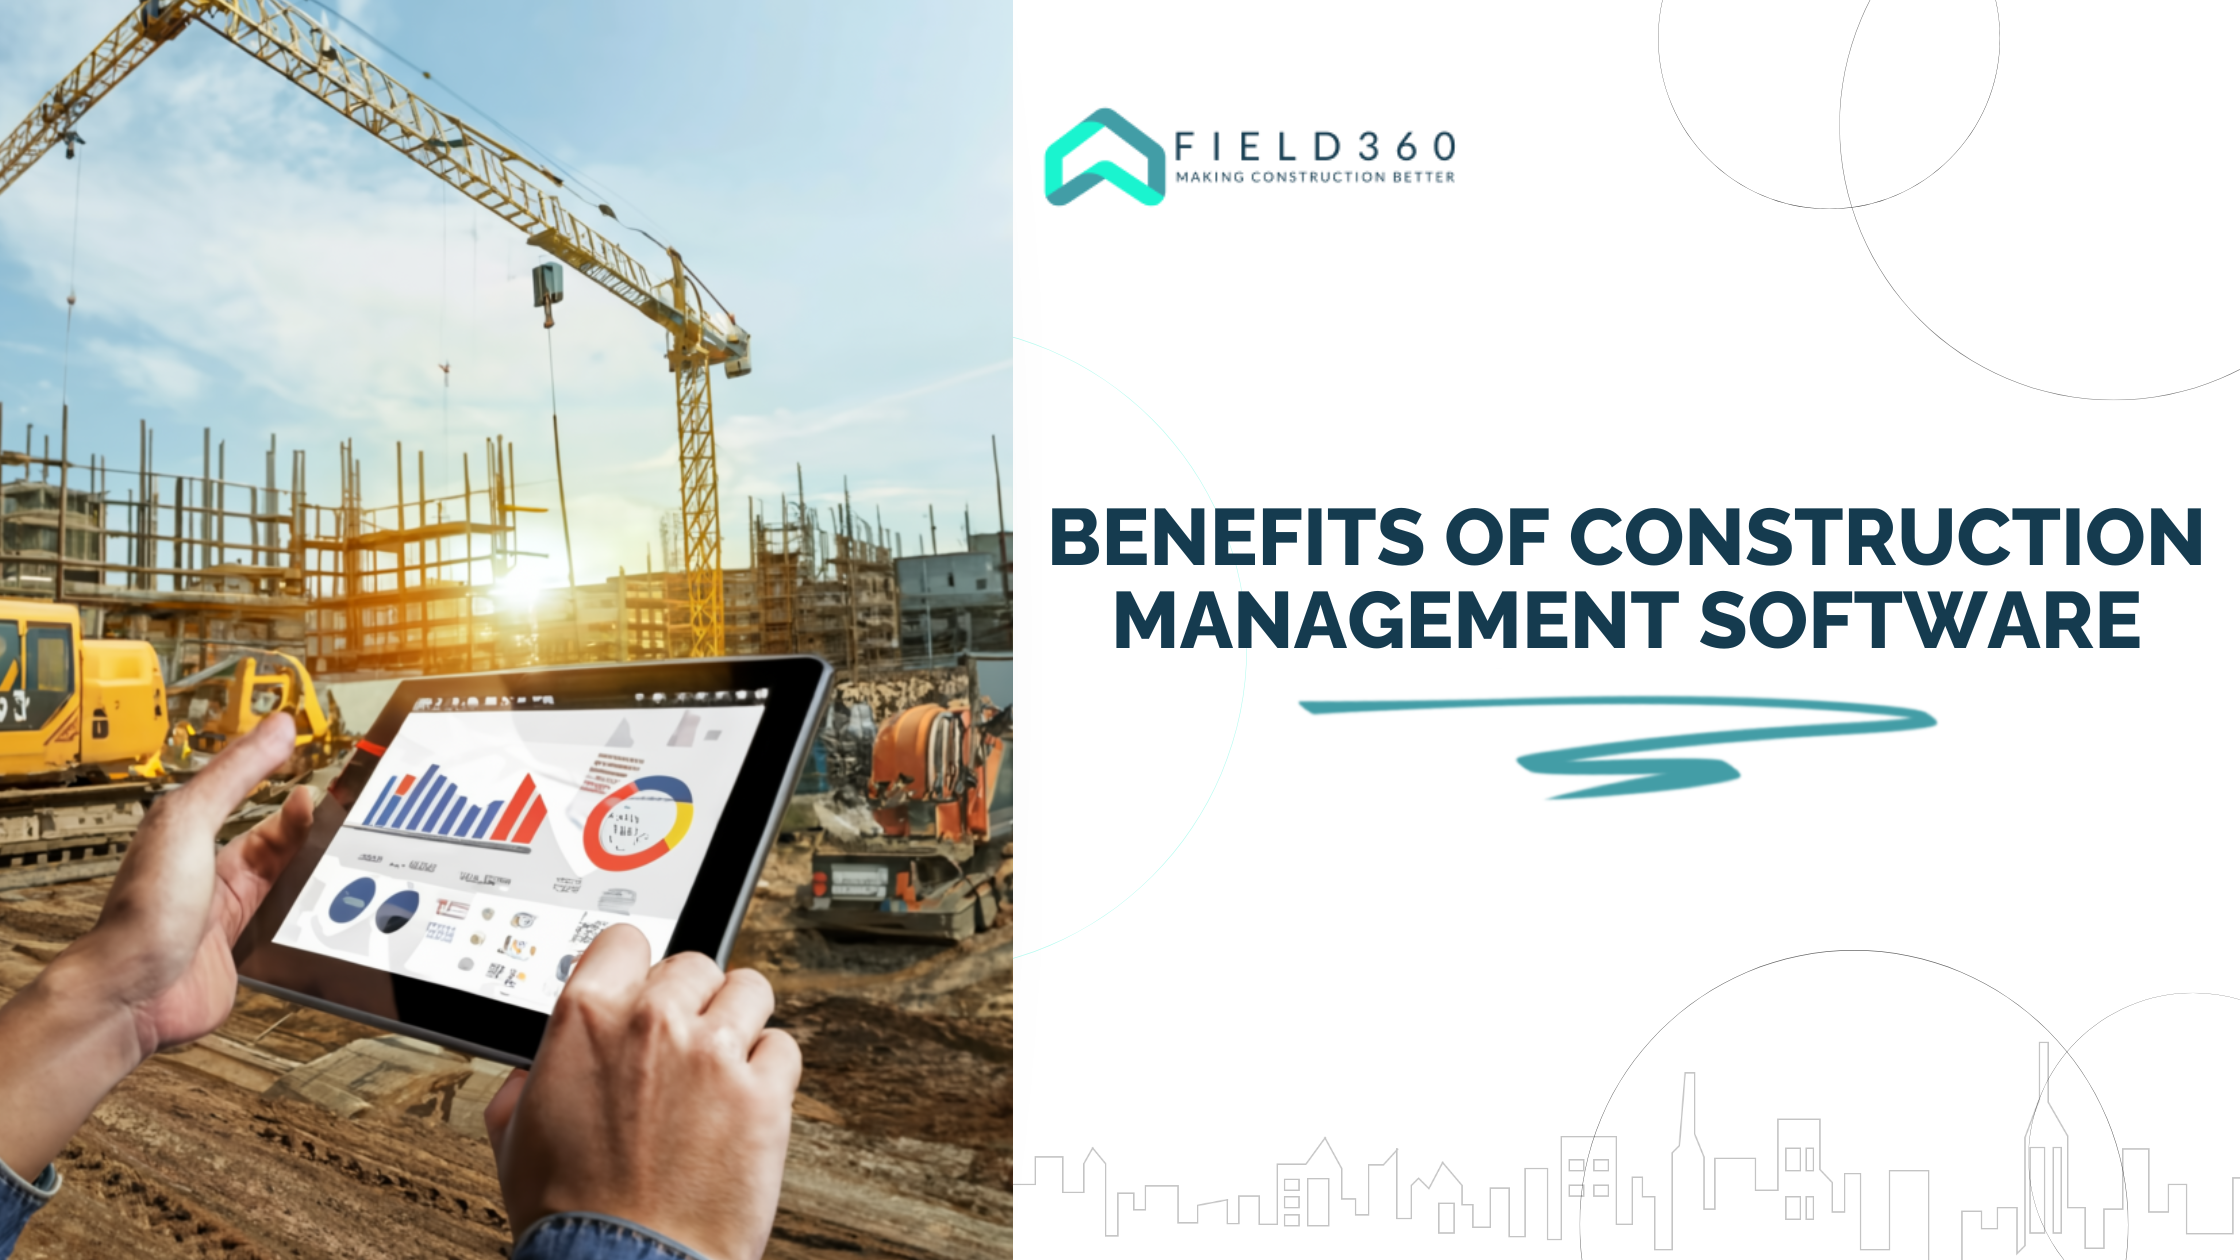 Benefits of Construction Site Management Software